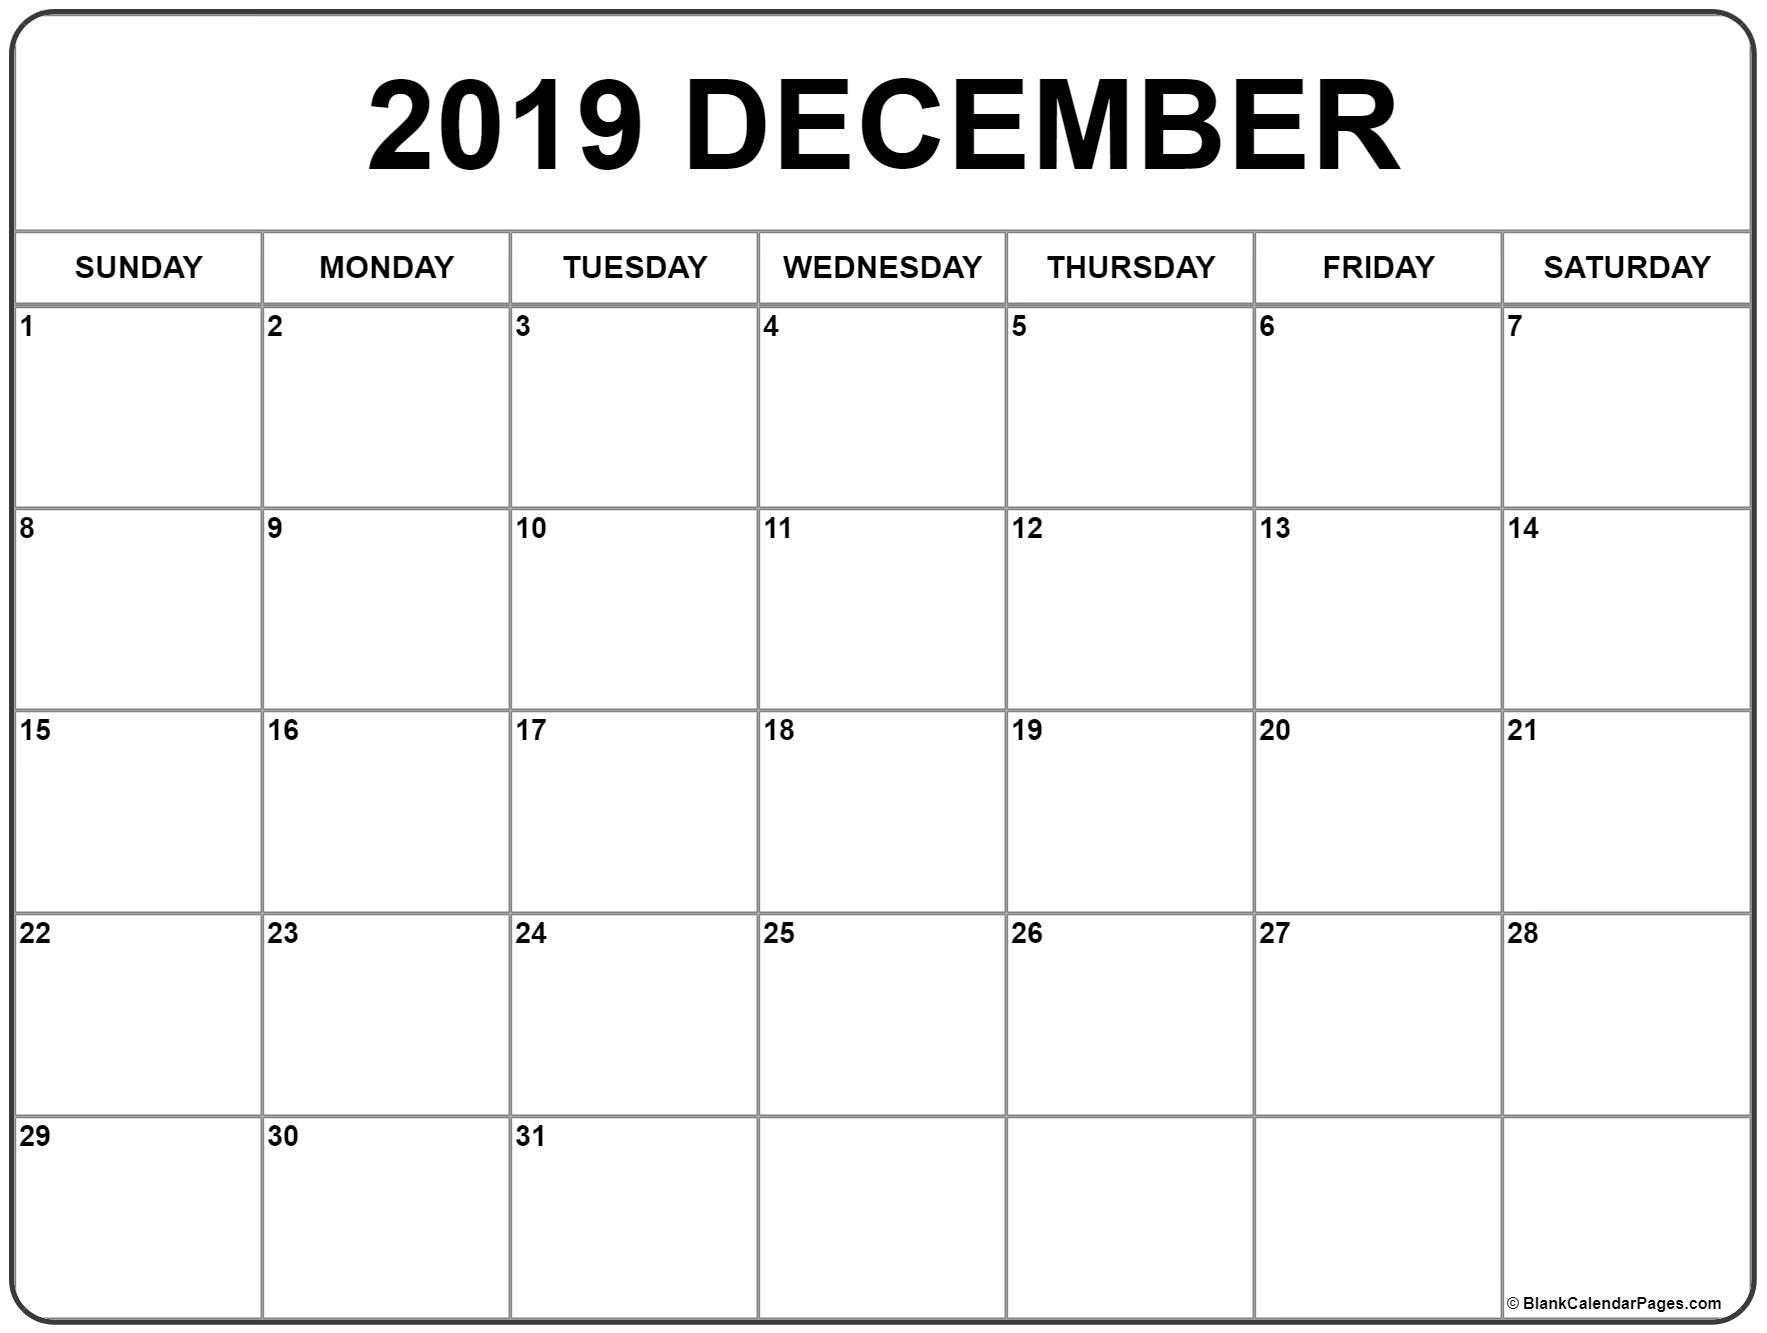 December 2019 Printable Calendar - Create Your Calendar For